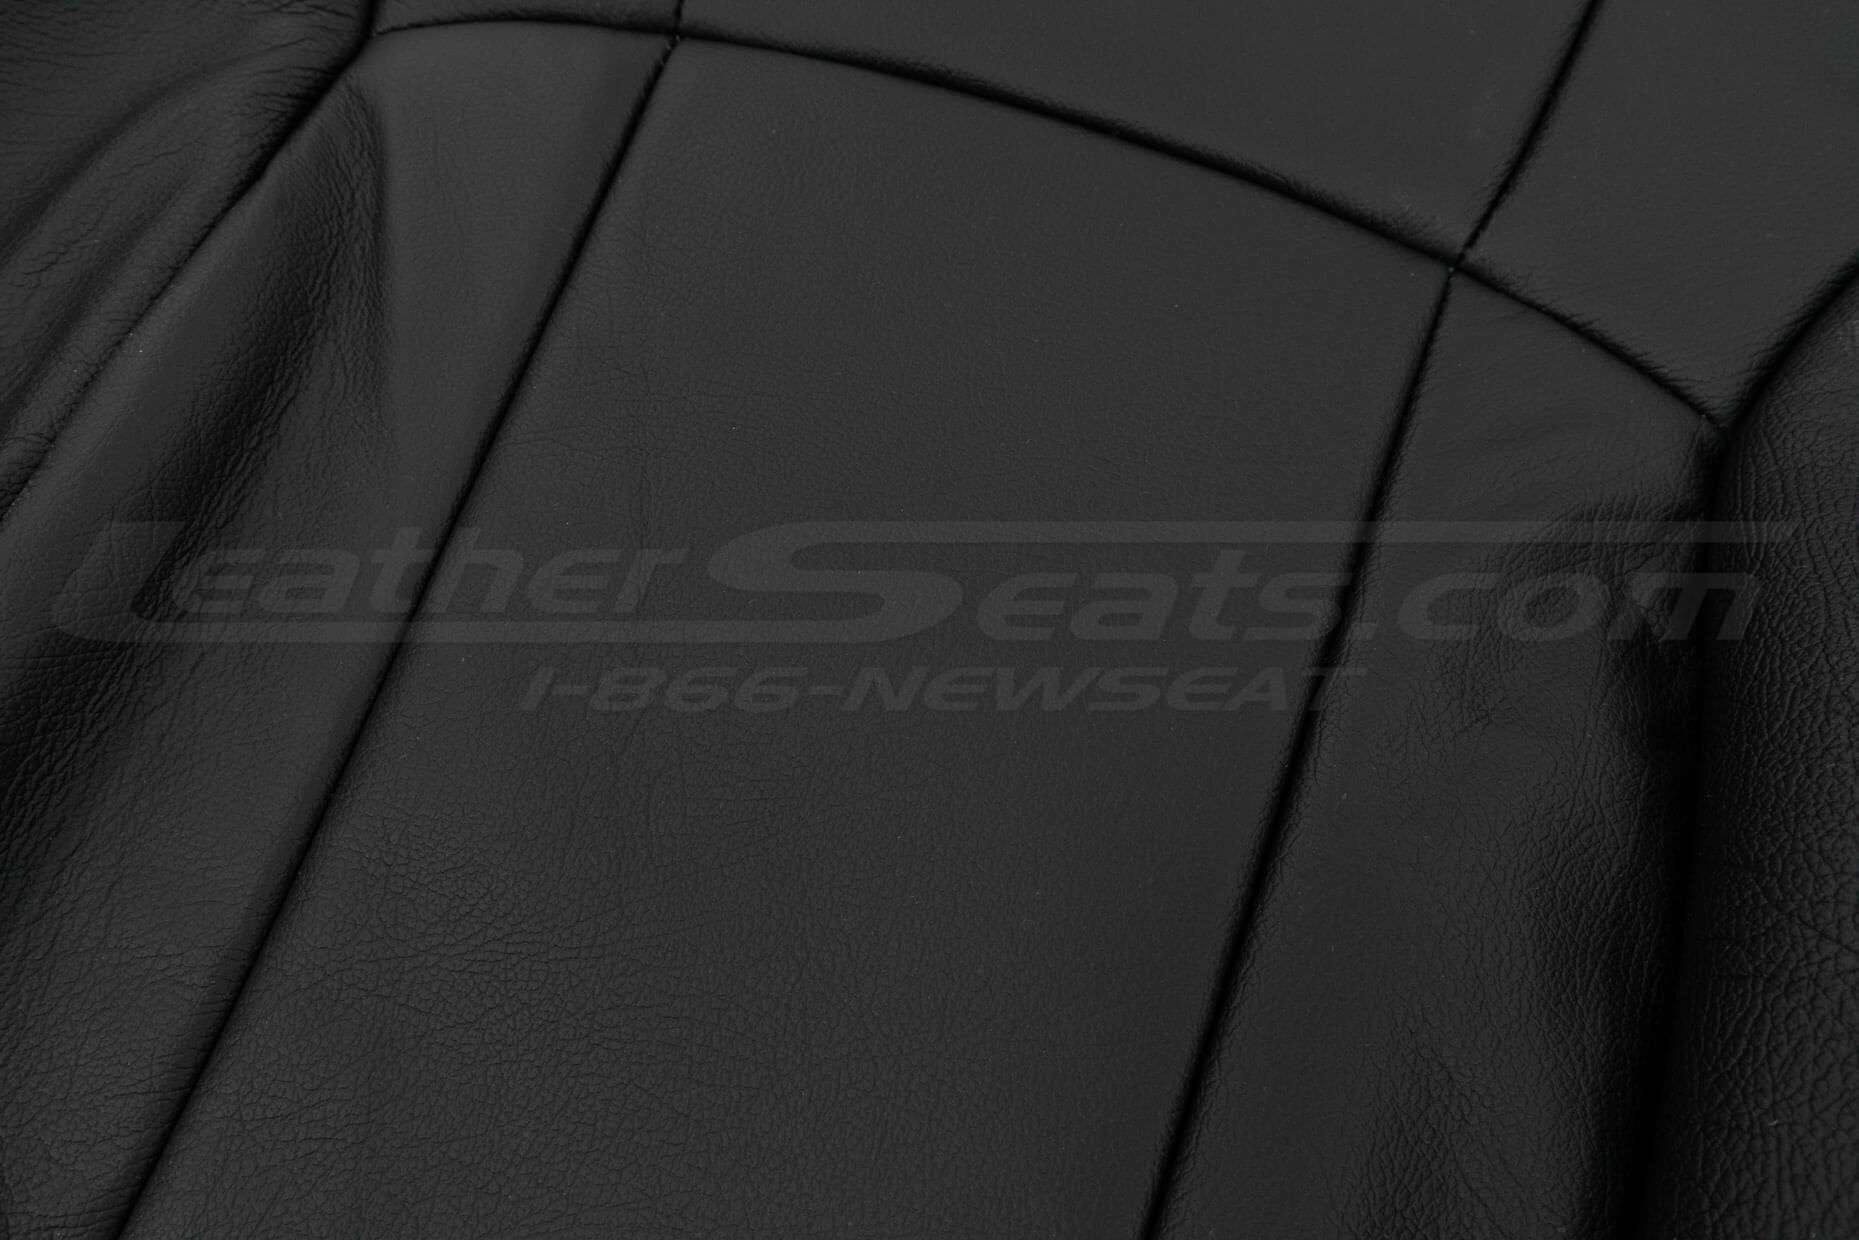 Backrest insert leather texture close-up